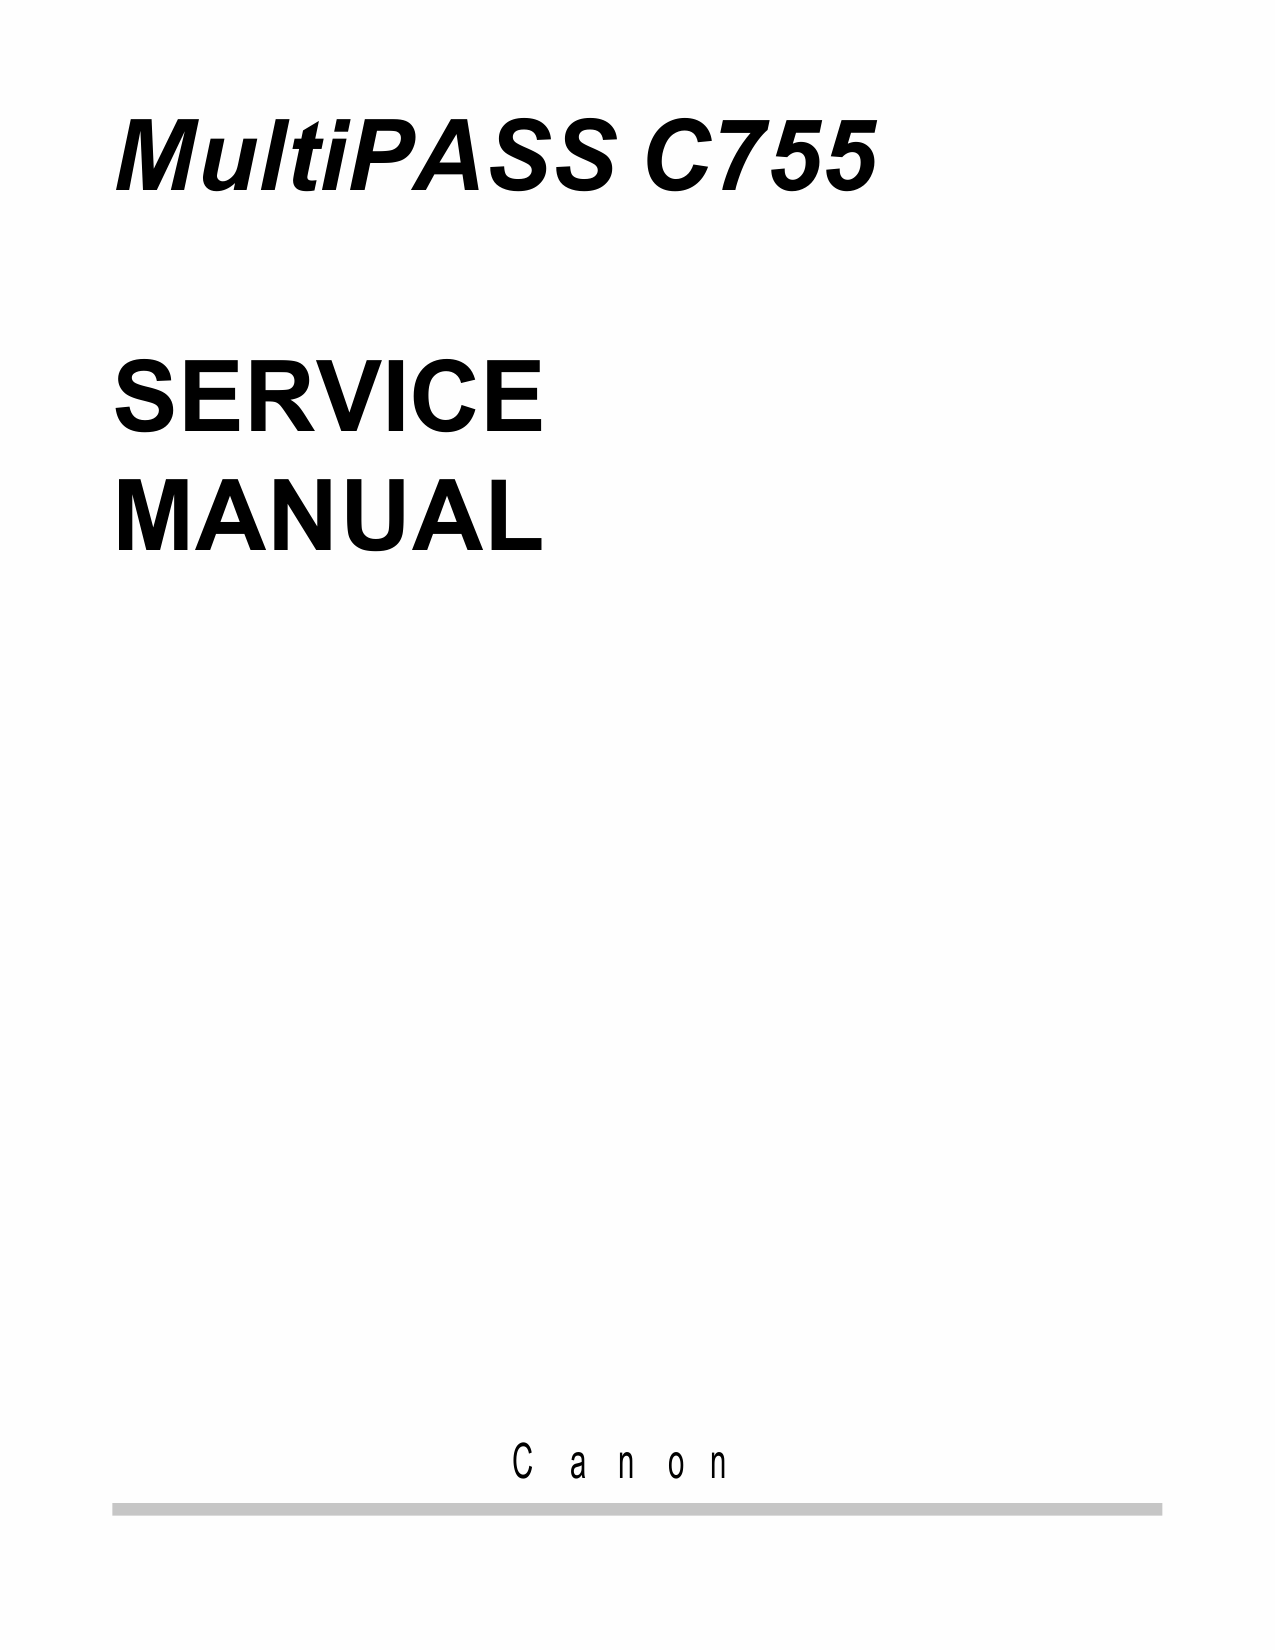 Canon MultiPASS MP-C755 Service Manual-1